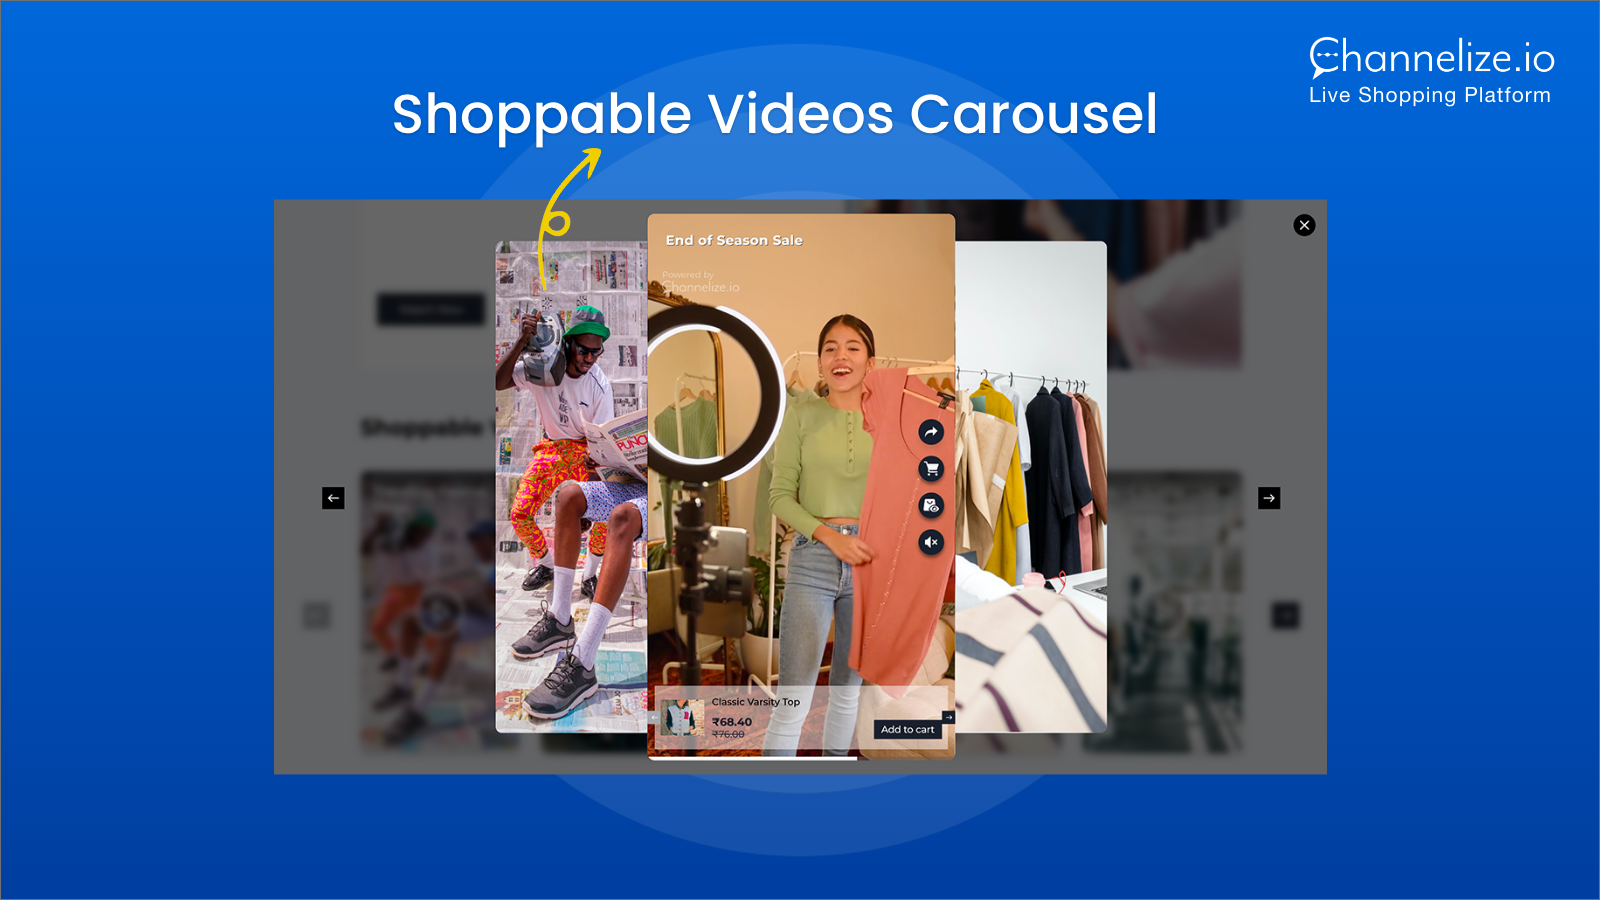 Shoppable Videos Carousel